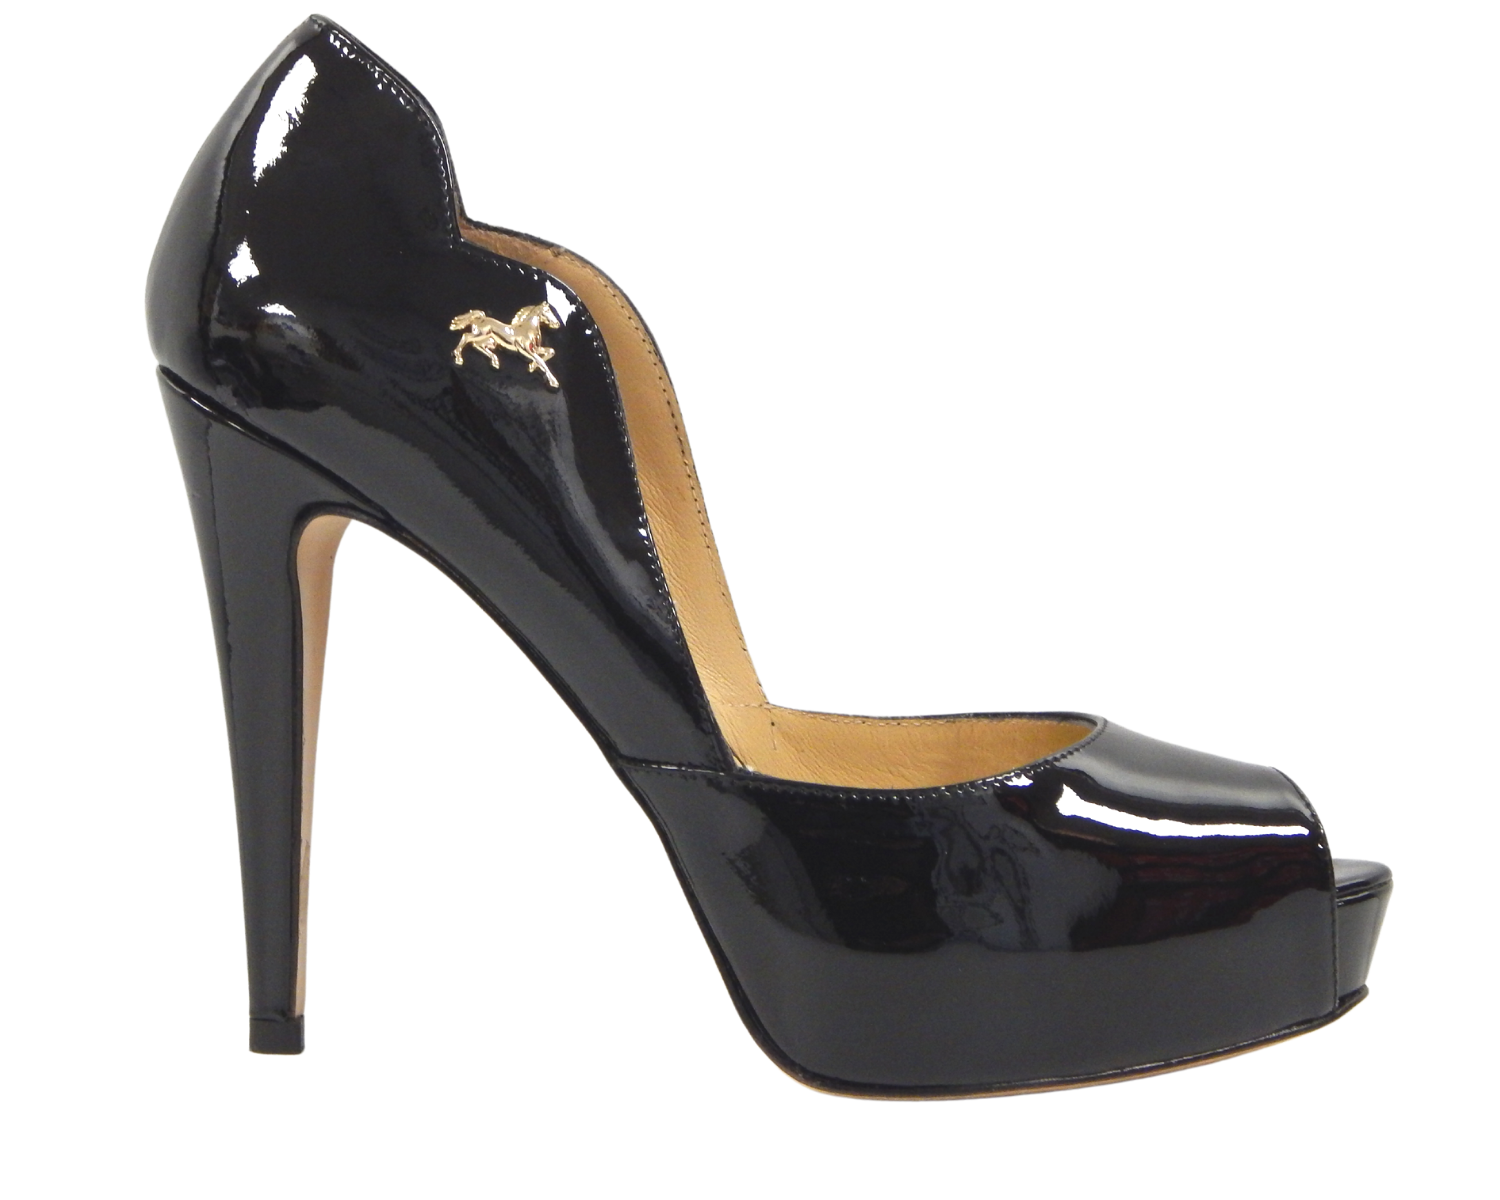 Cavalinho Open Toe Platform Heel - Size 8 - Black - WebsiteProductphotos_8_1dcf95b3-fc9b-4581-a62c-bade2335807d